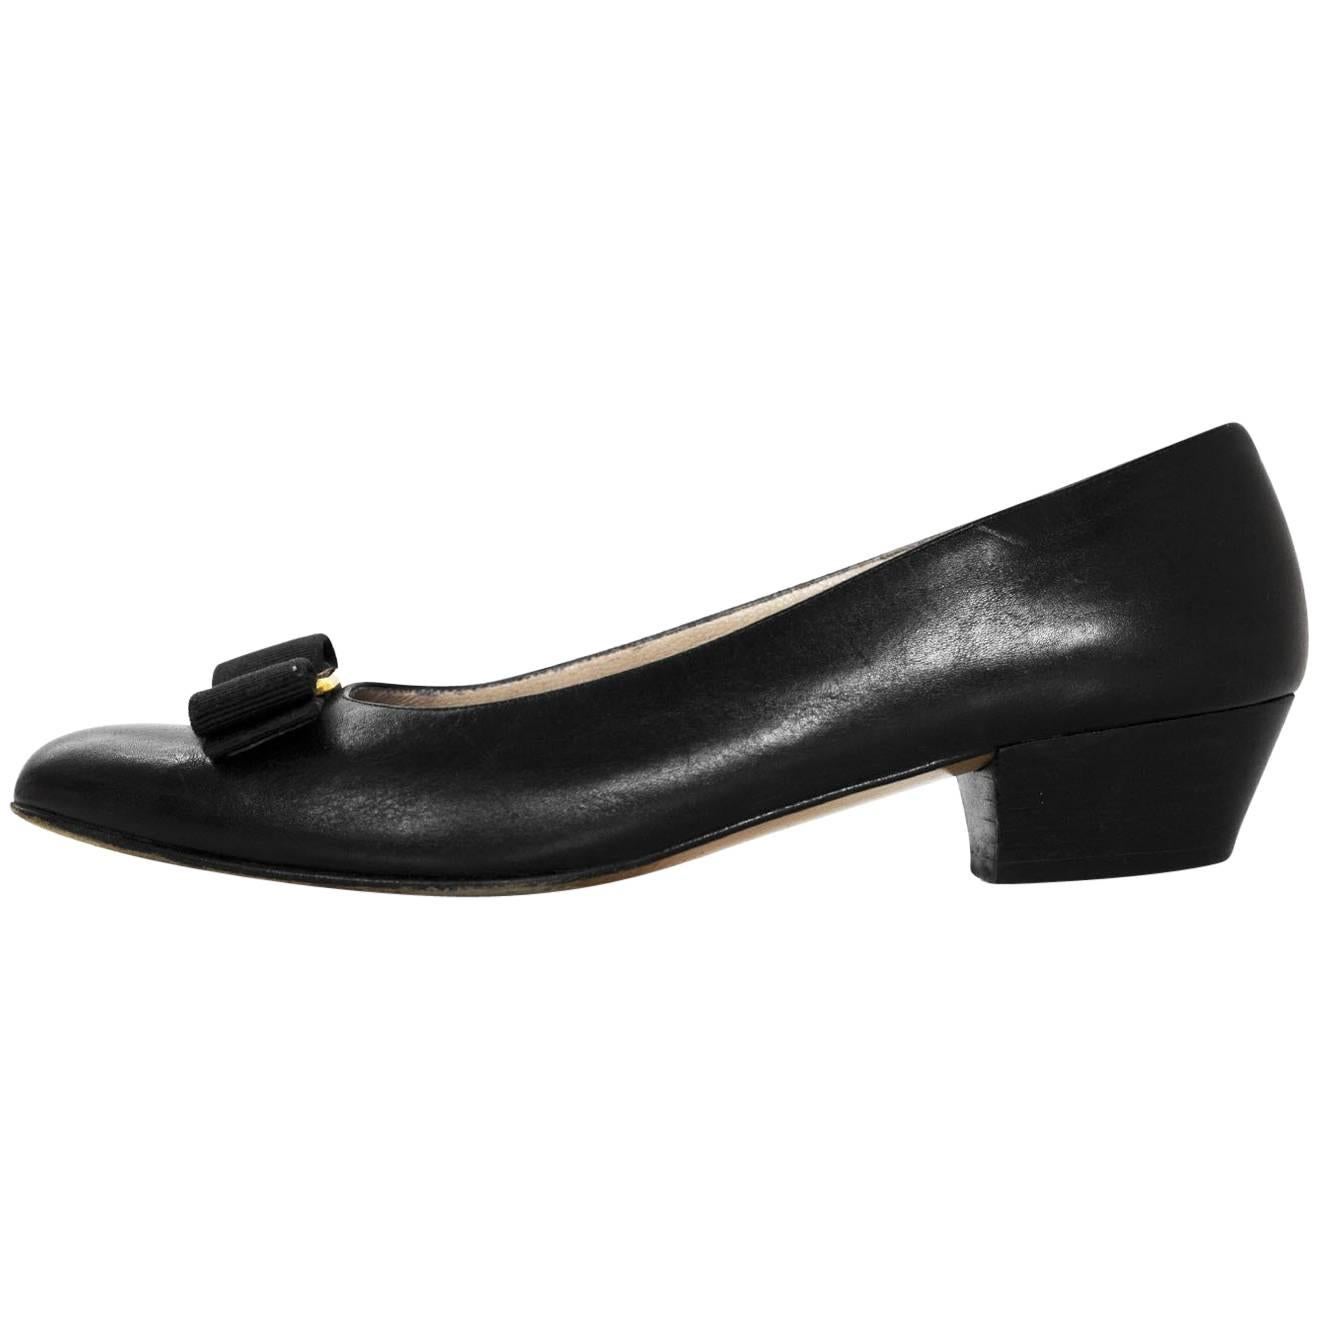 Salvatore Ferragamo Black Varina Bow Shoes Size 37.5